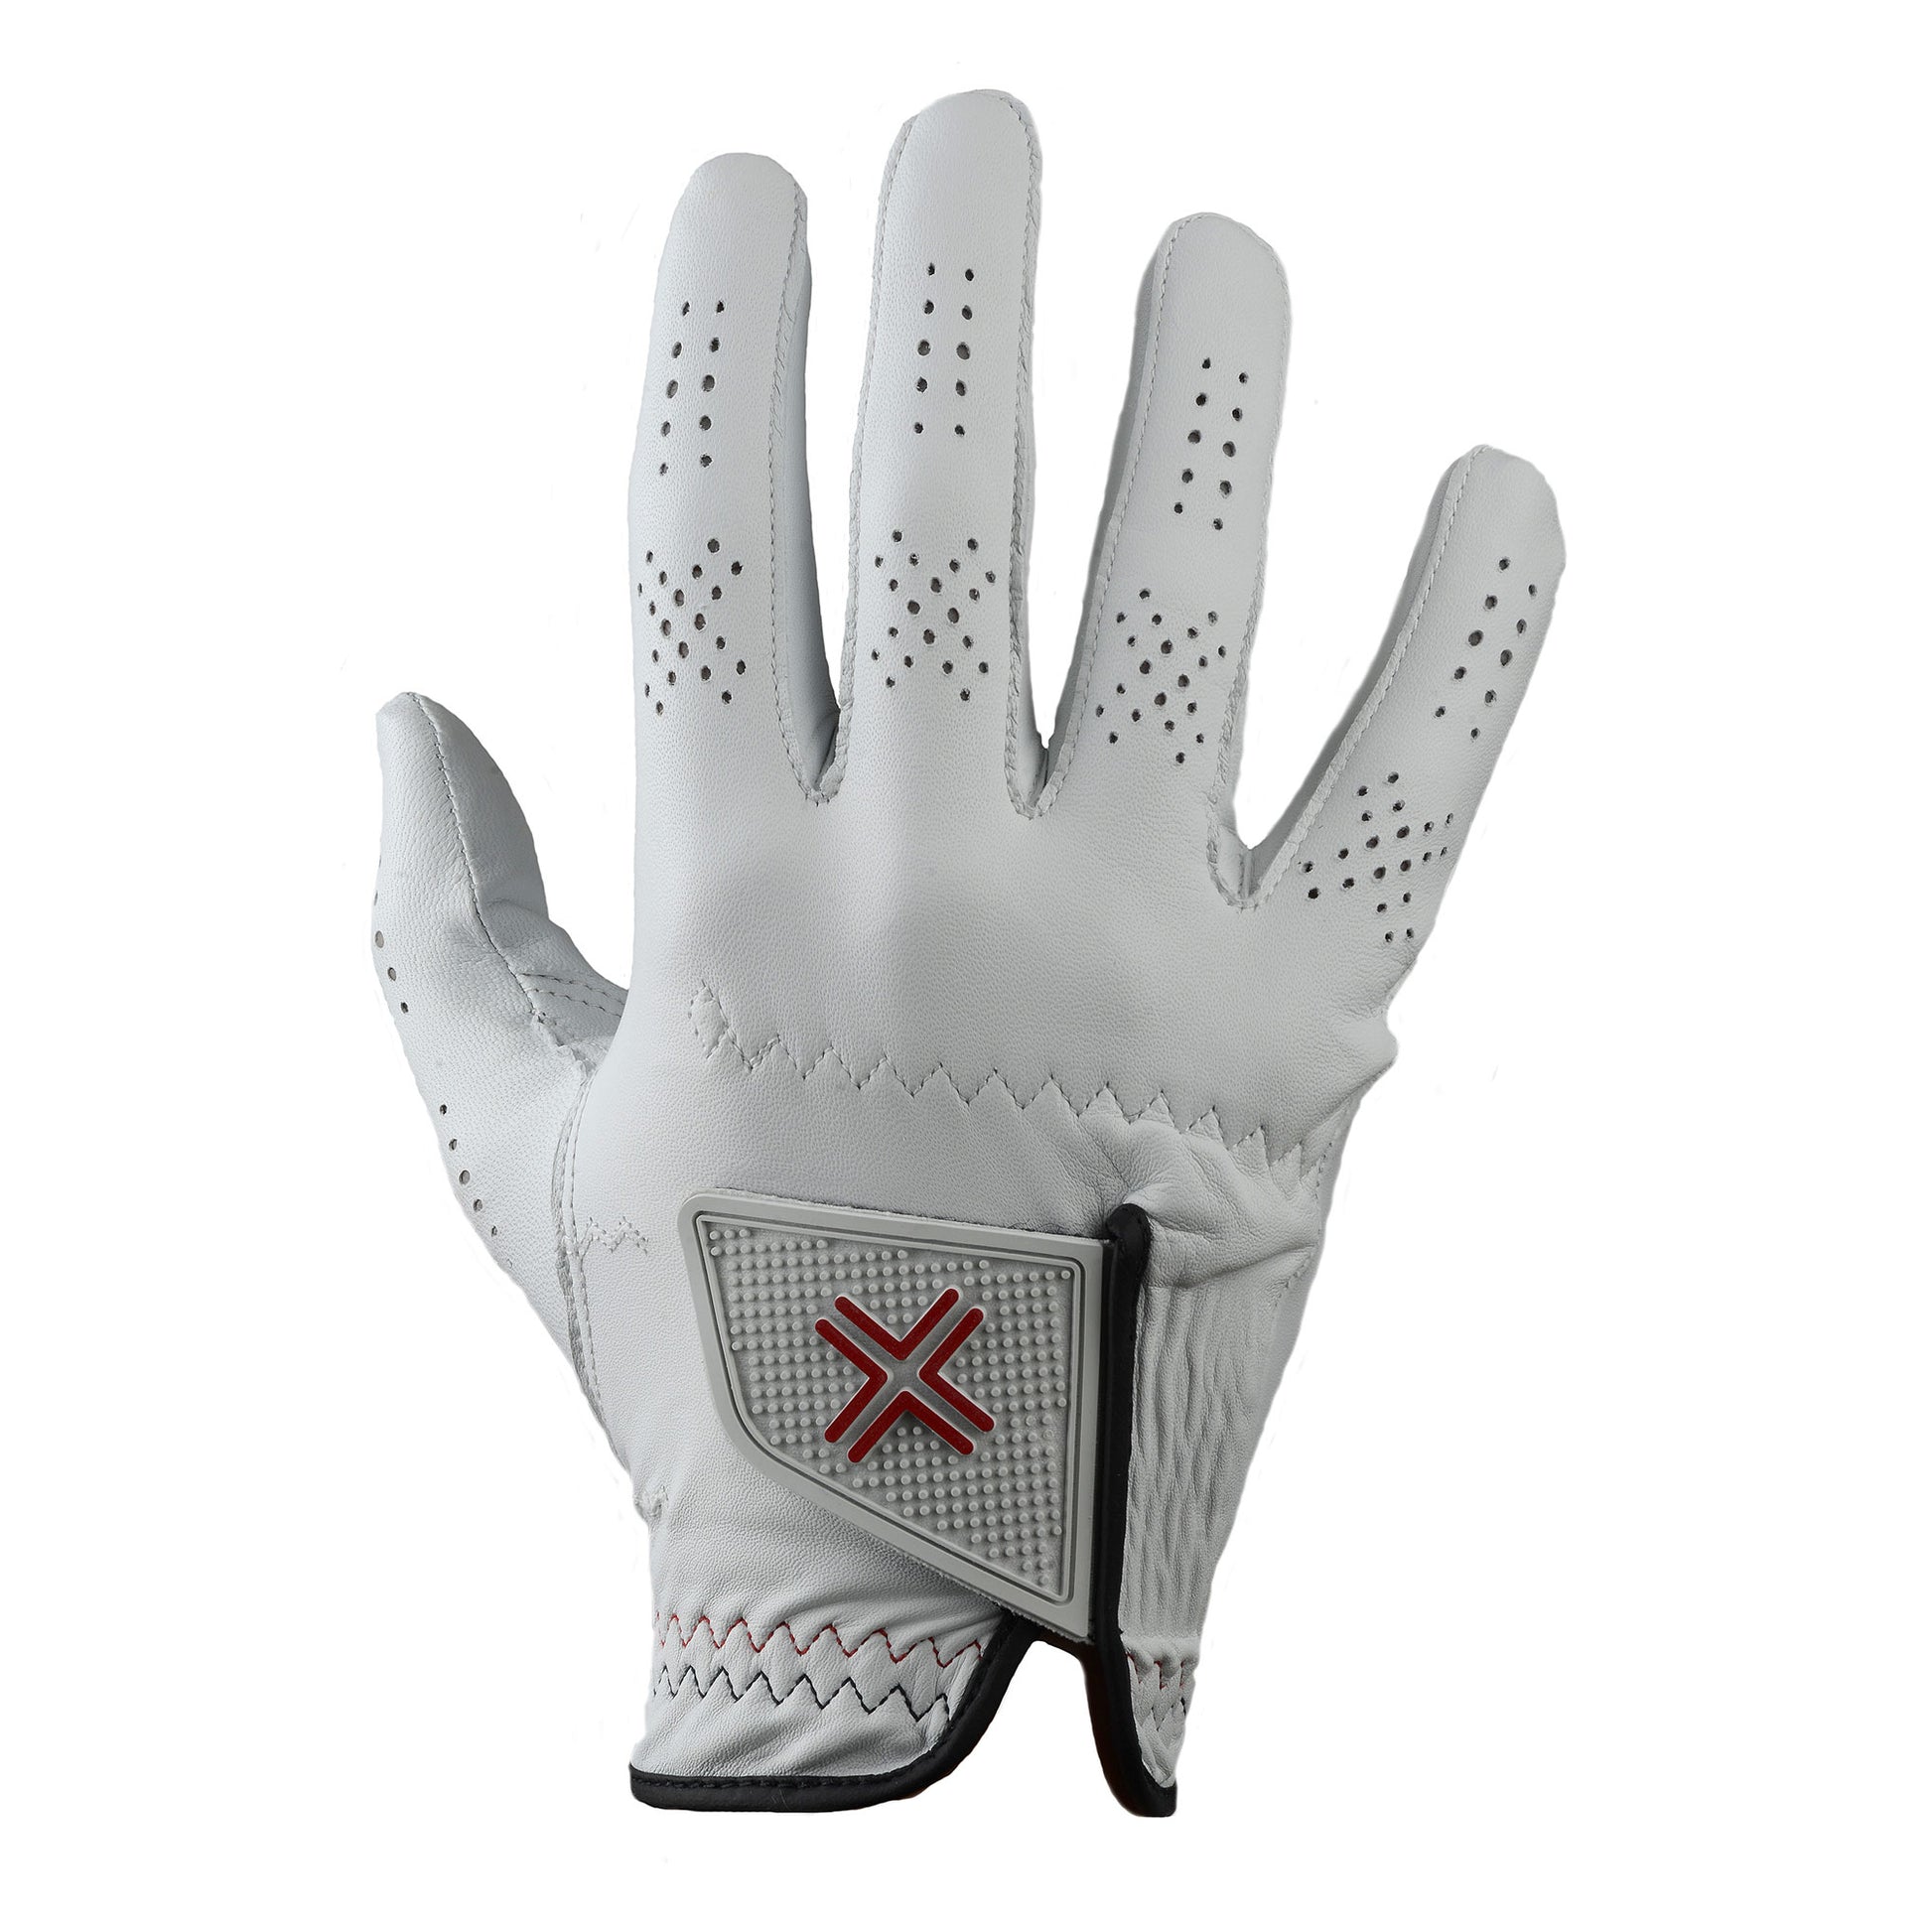 PAYNTR X Golf Glove - RH Front